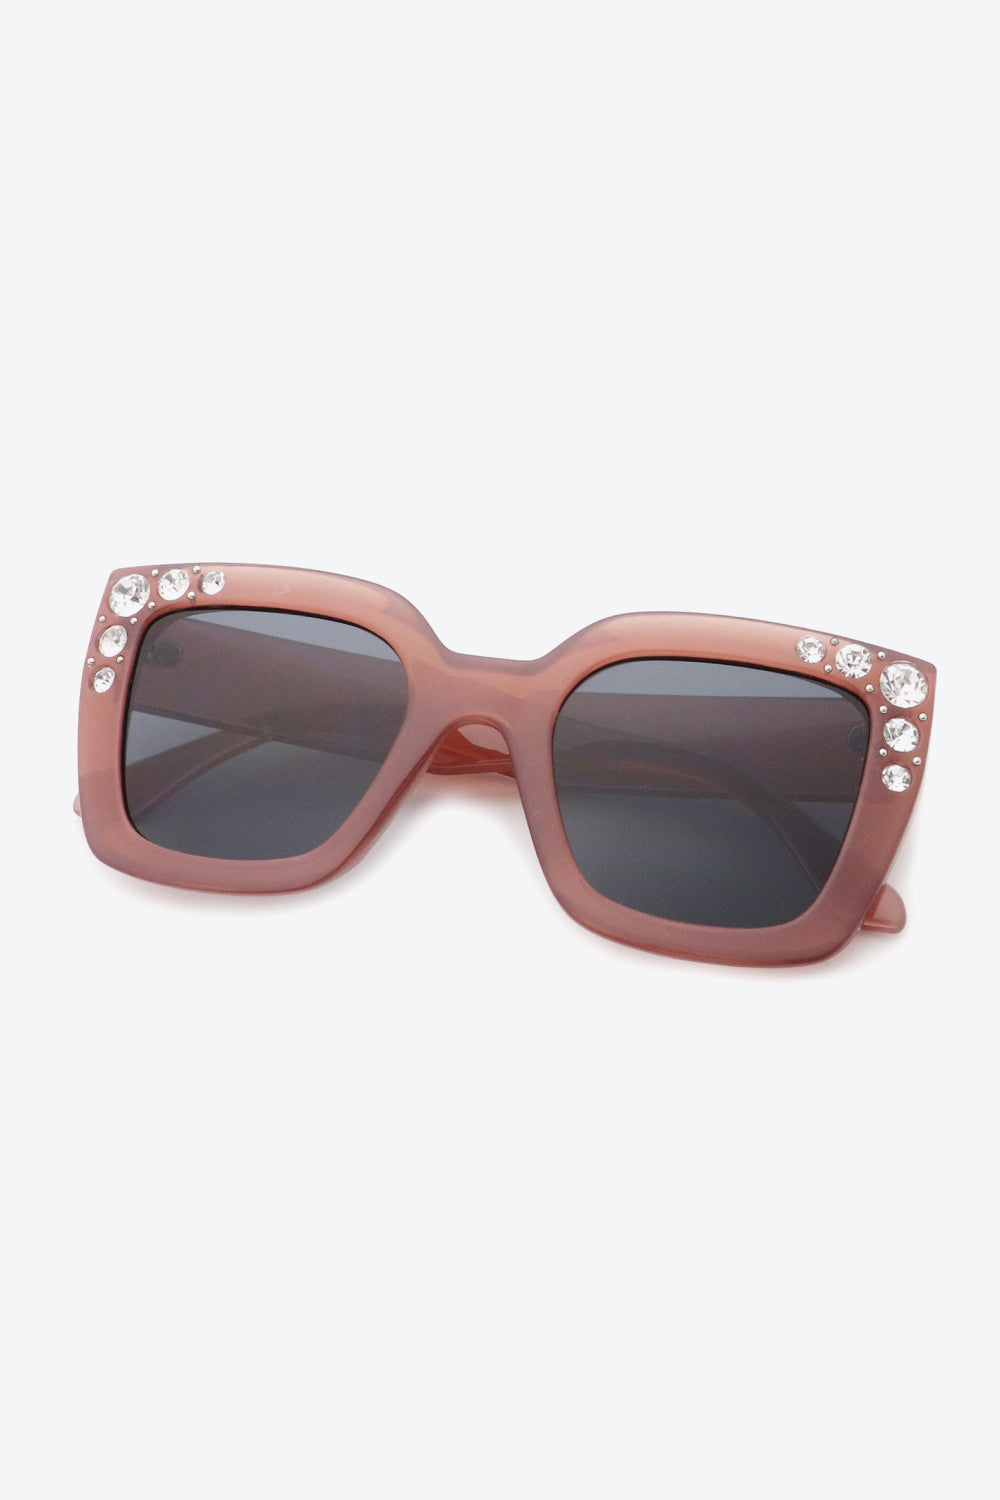 Diamond Girl Sunglasses